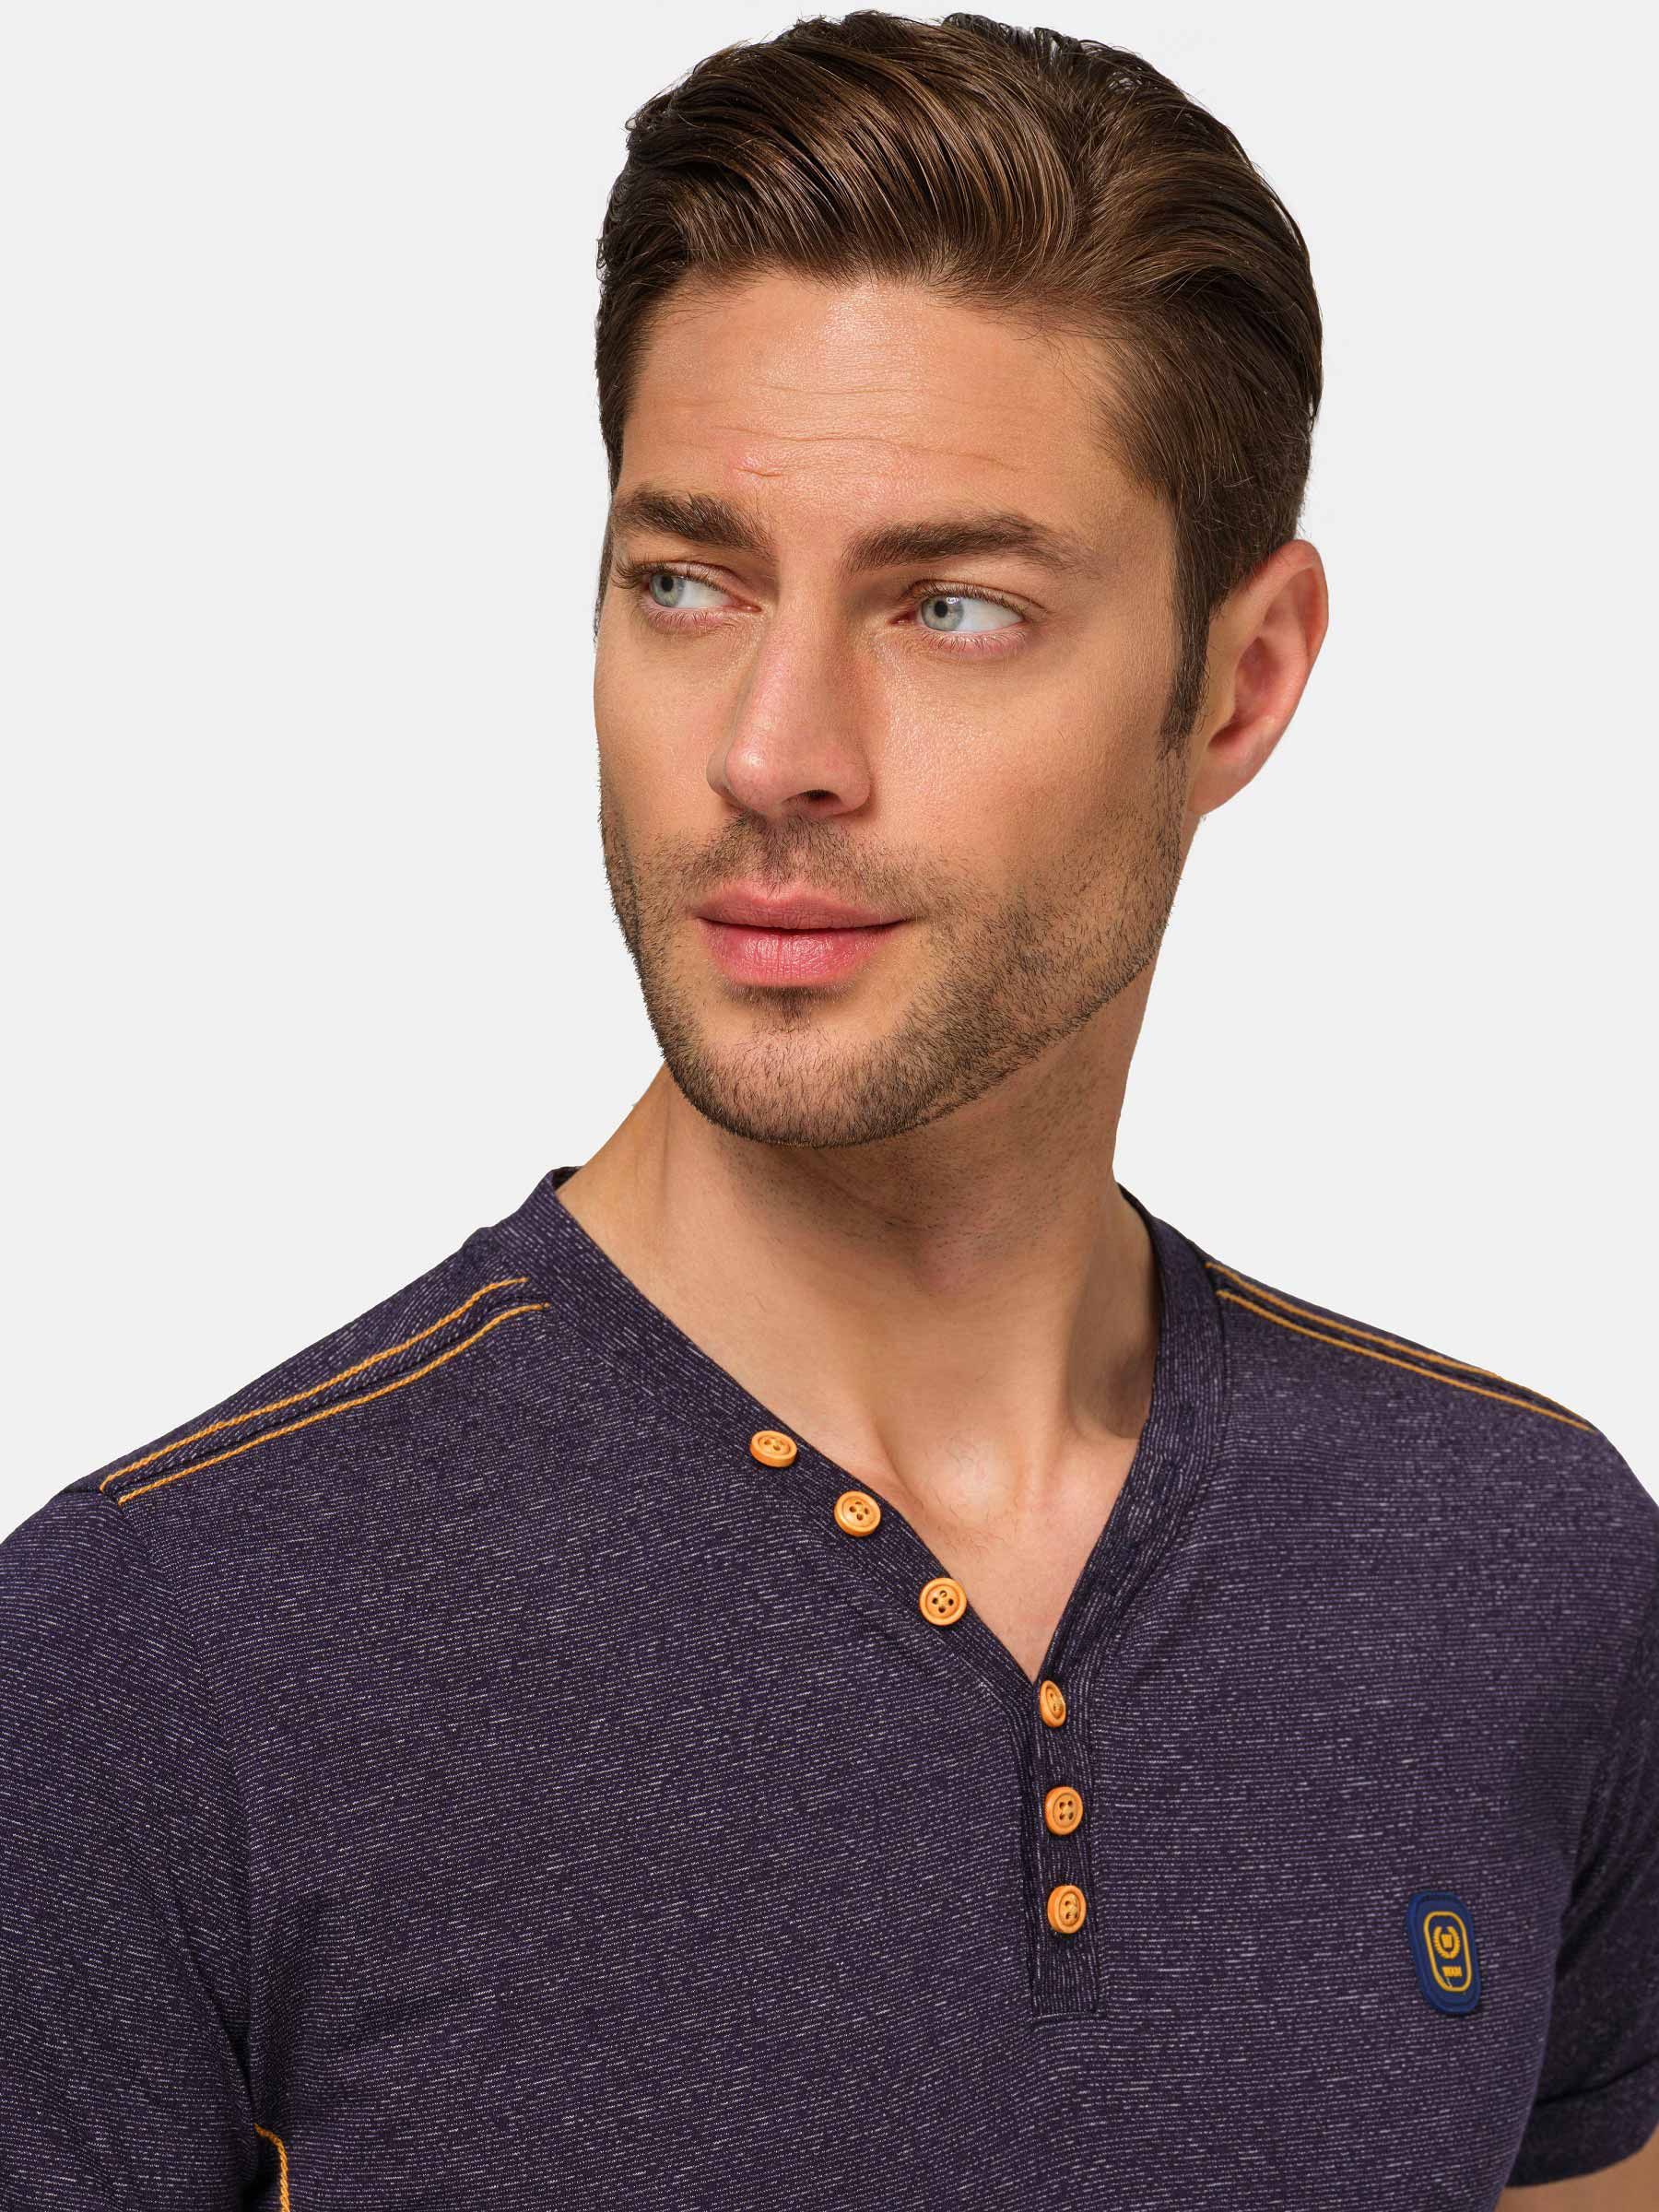 Men's V-neck T-shirts  Stylish and Comfortable Cotton Shirts